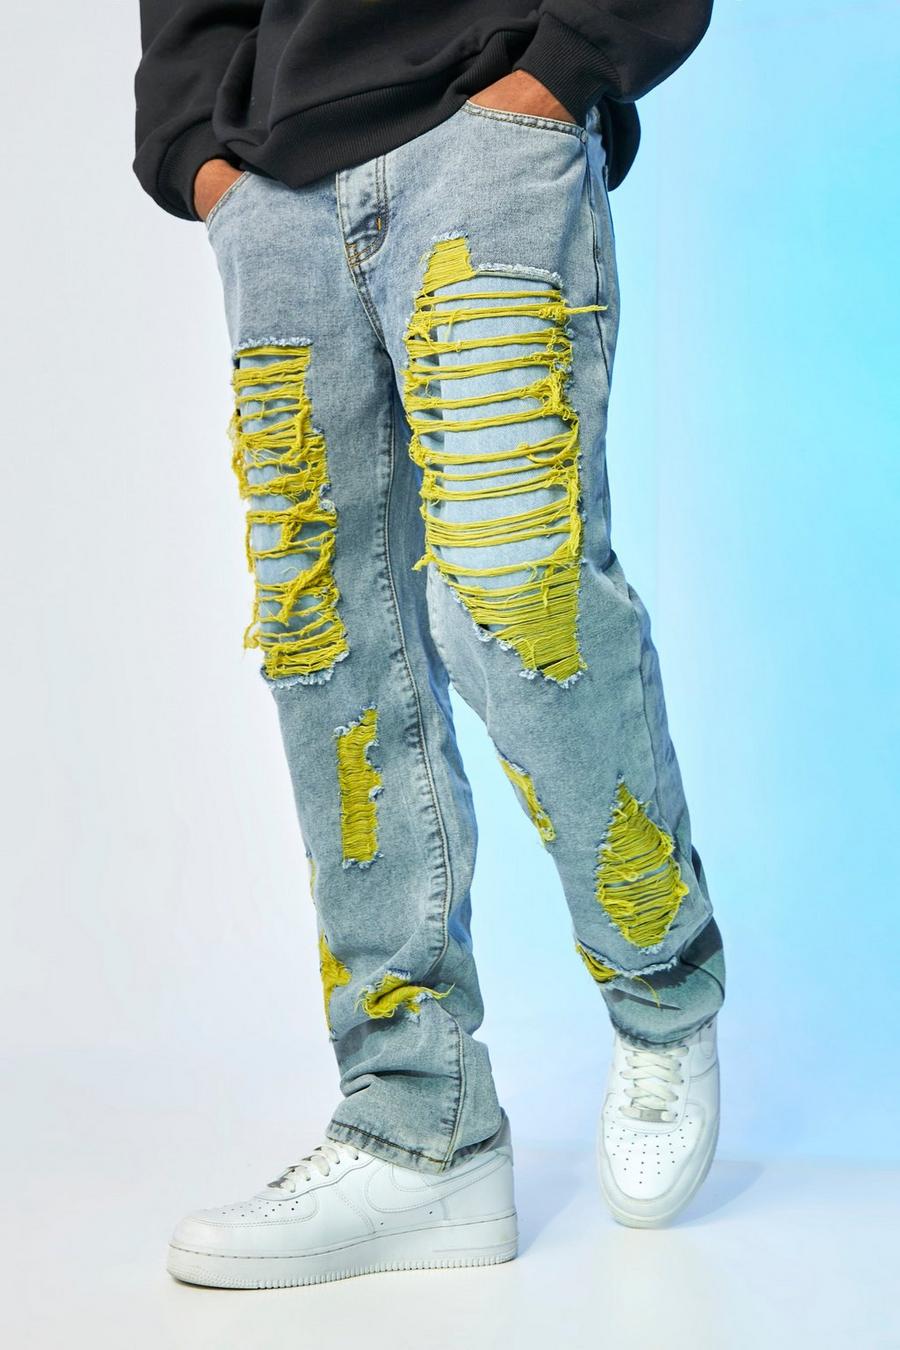 Lockere, extrem zerrissene Jeans in gelb+O1295, Ice blue image number 1